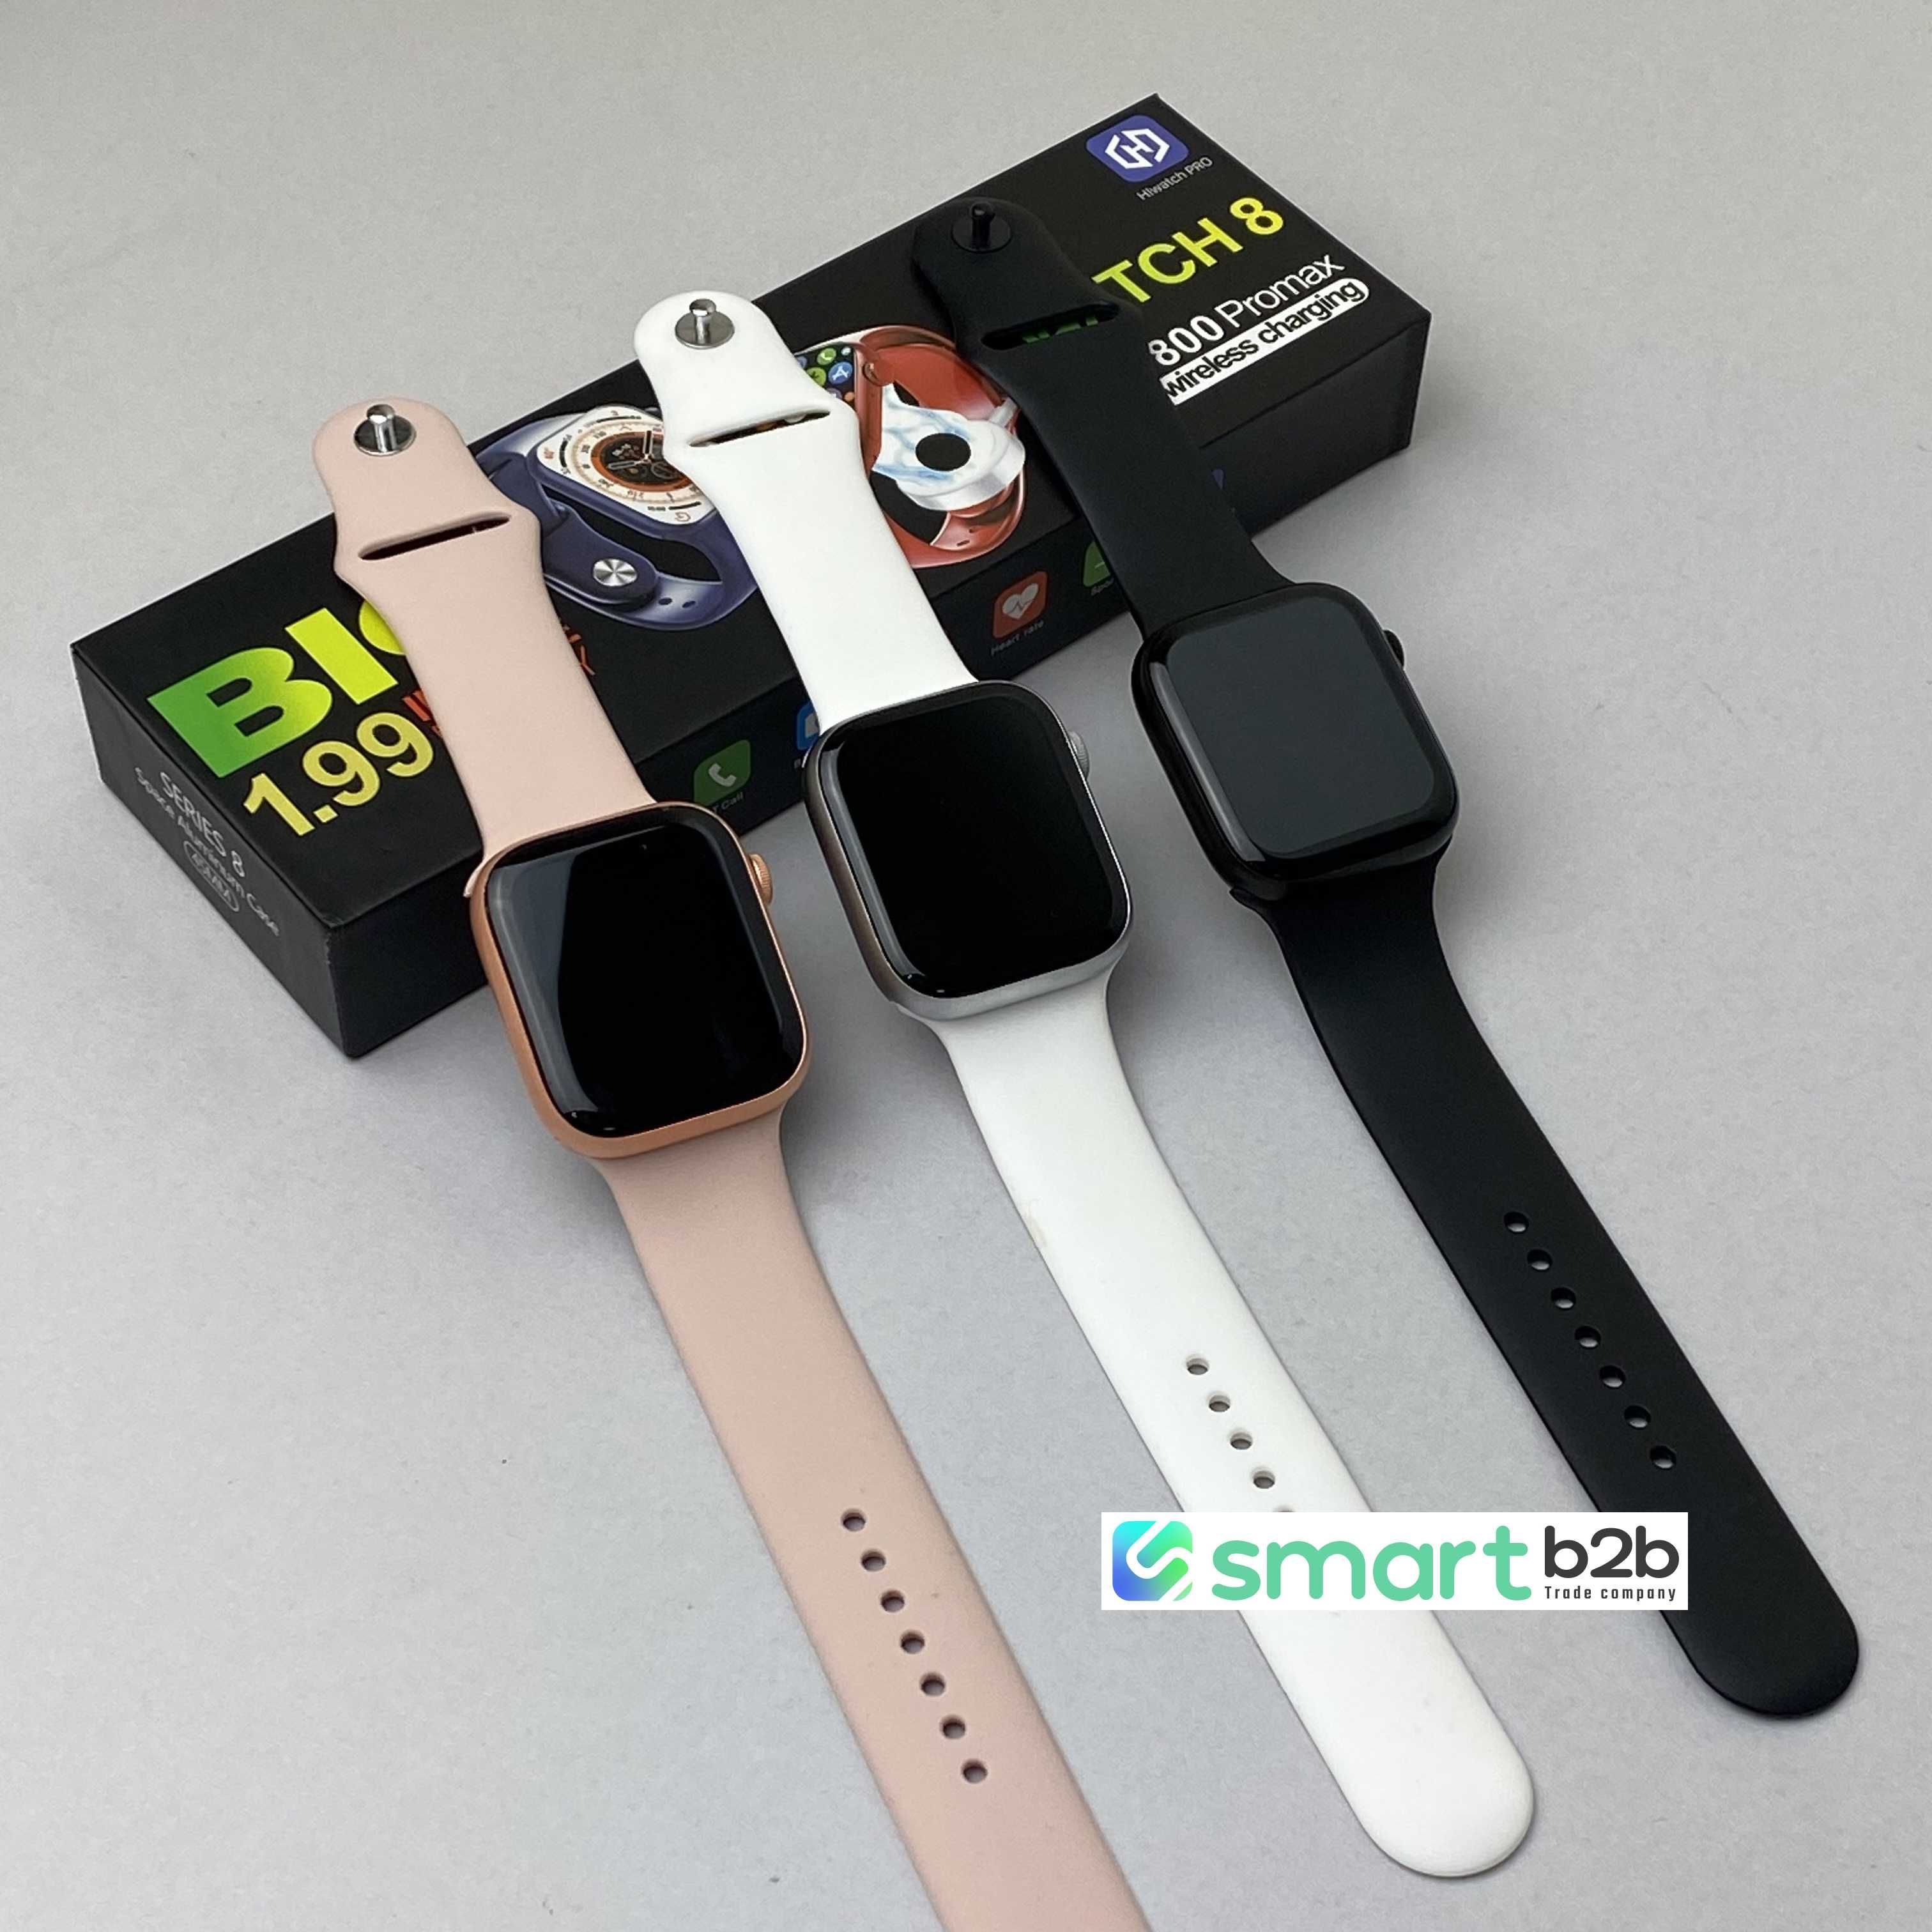 Умные часы Smart Watch T800 Pro Max / T900 Pro Max (Lux) ОПТ / ДРОП